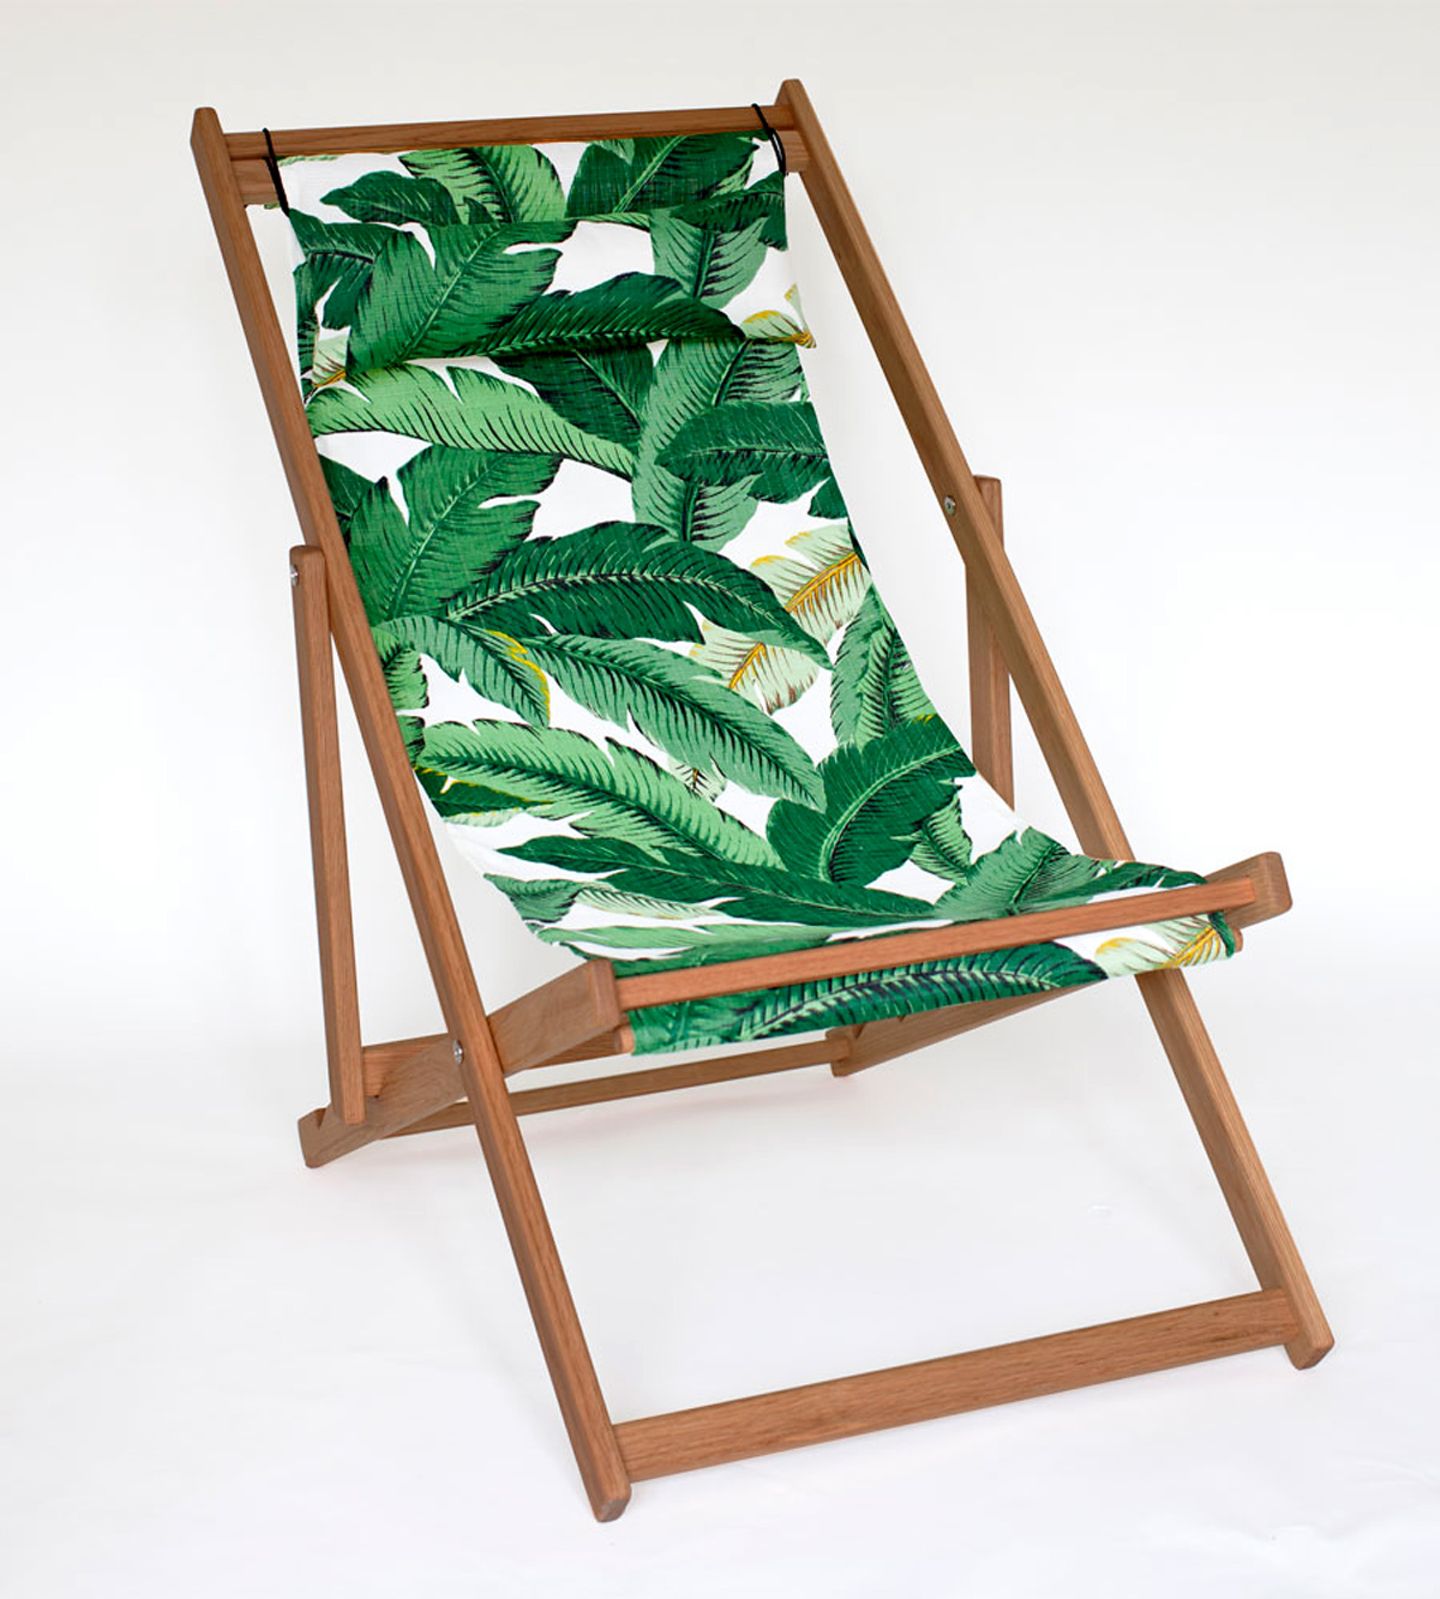 Relaxt: "Tahiti Deck Chair" von Gallant & Jones